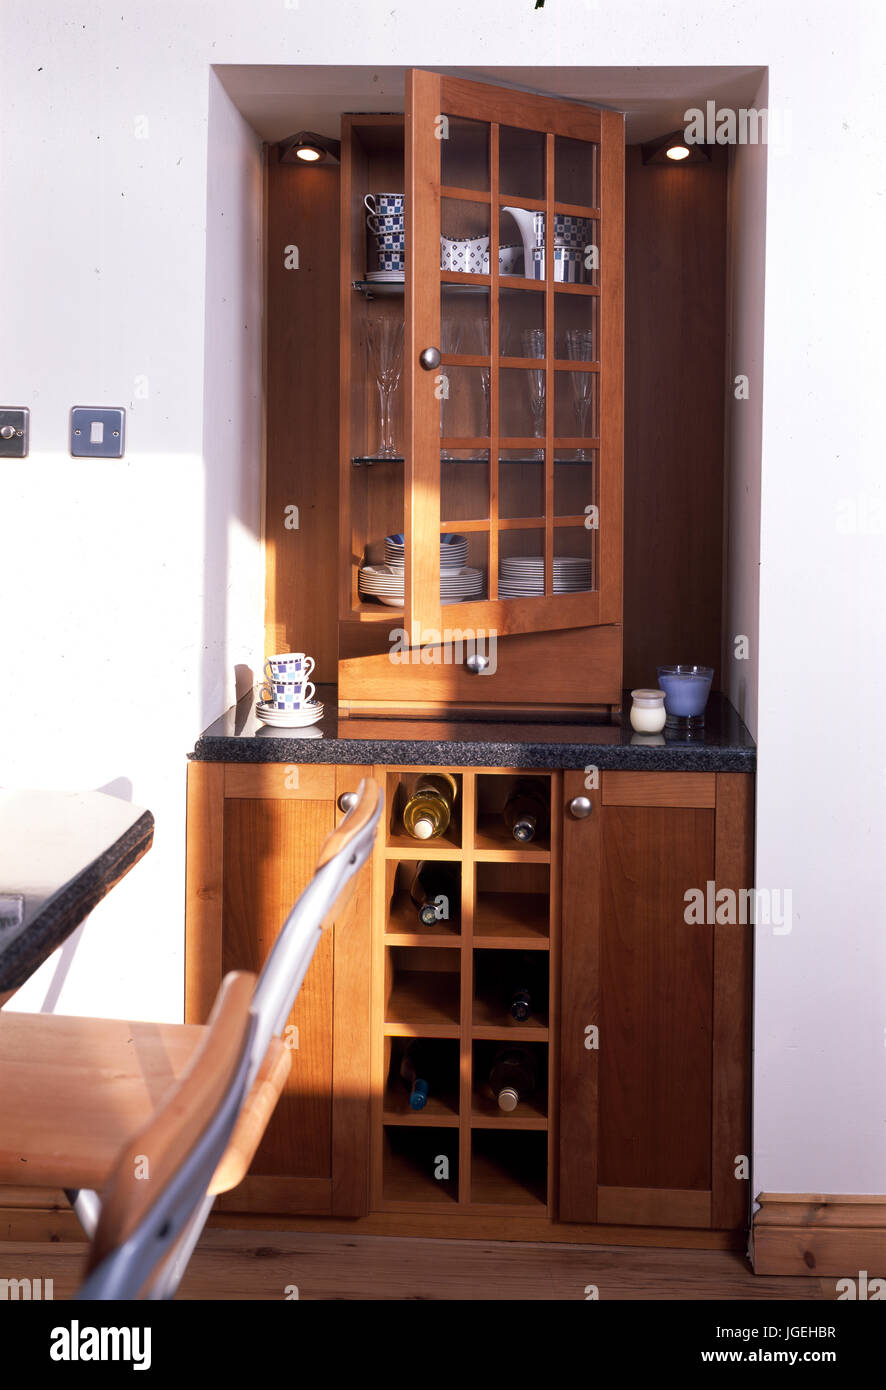 Kitchen storage in alcove Stock Photo